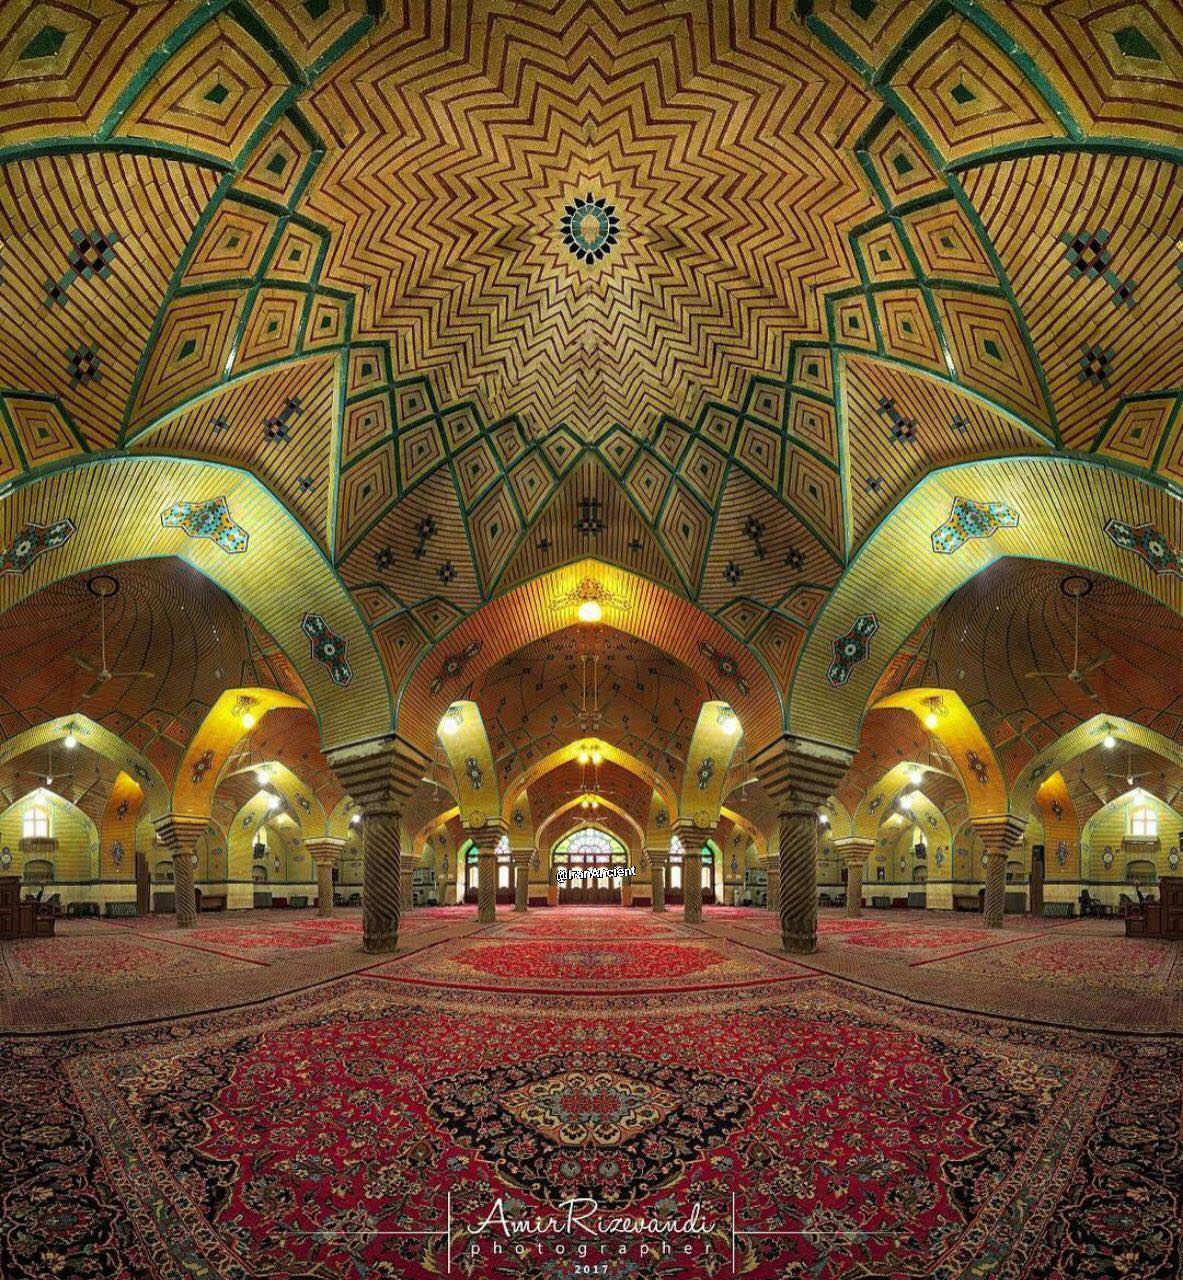 Iran's amazing architecture: Haj Shahbaz-Khan Mosque, in the western city of Kermanshah.